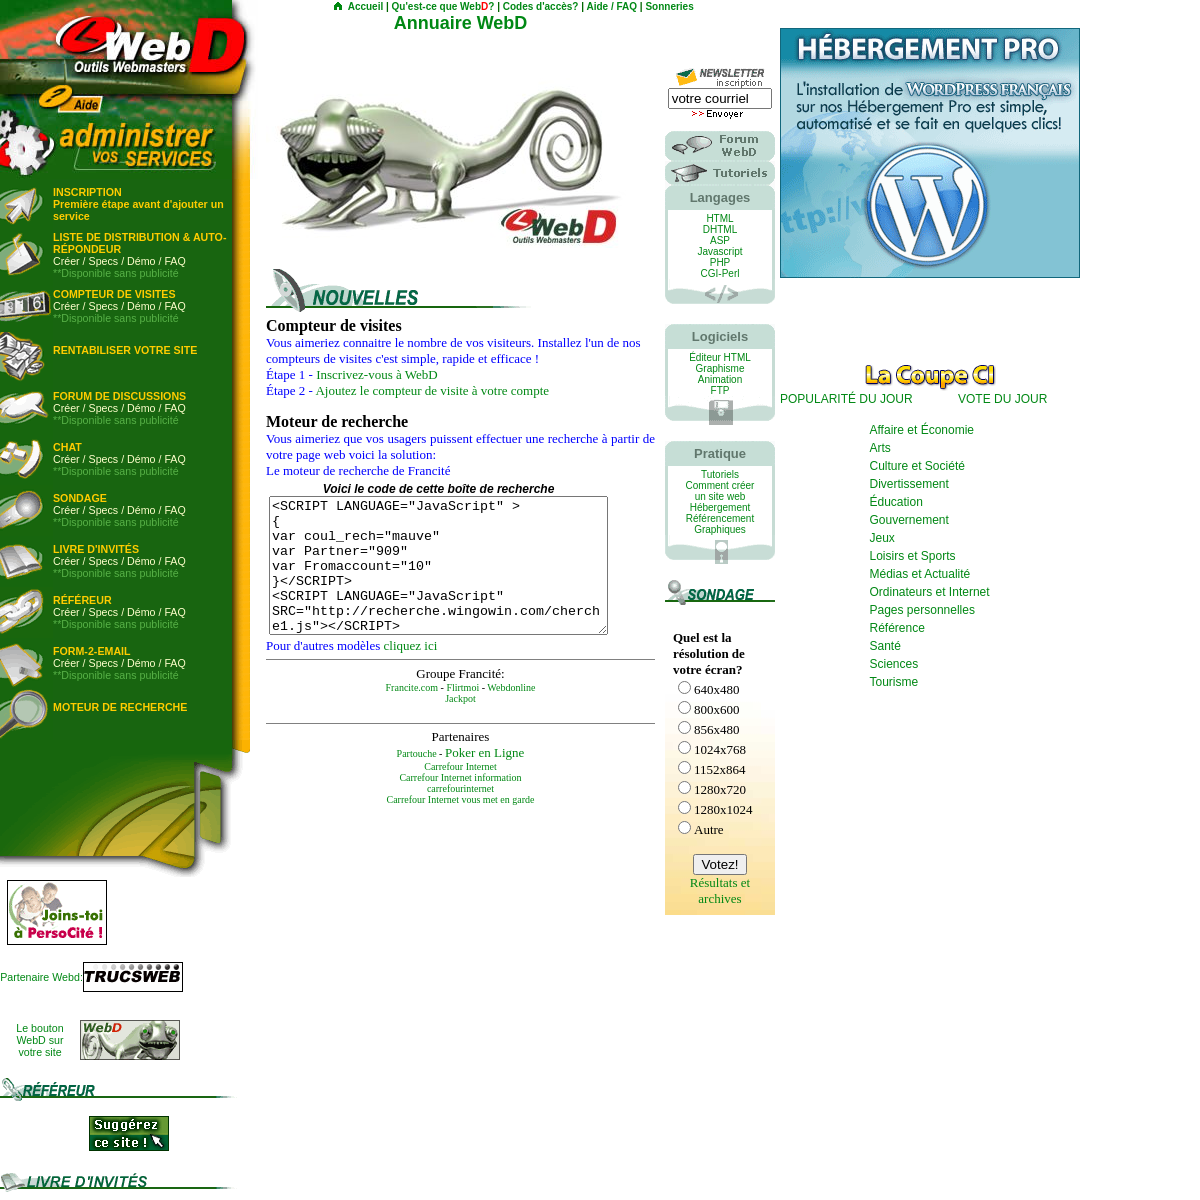 A complete backup of webdonline.com